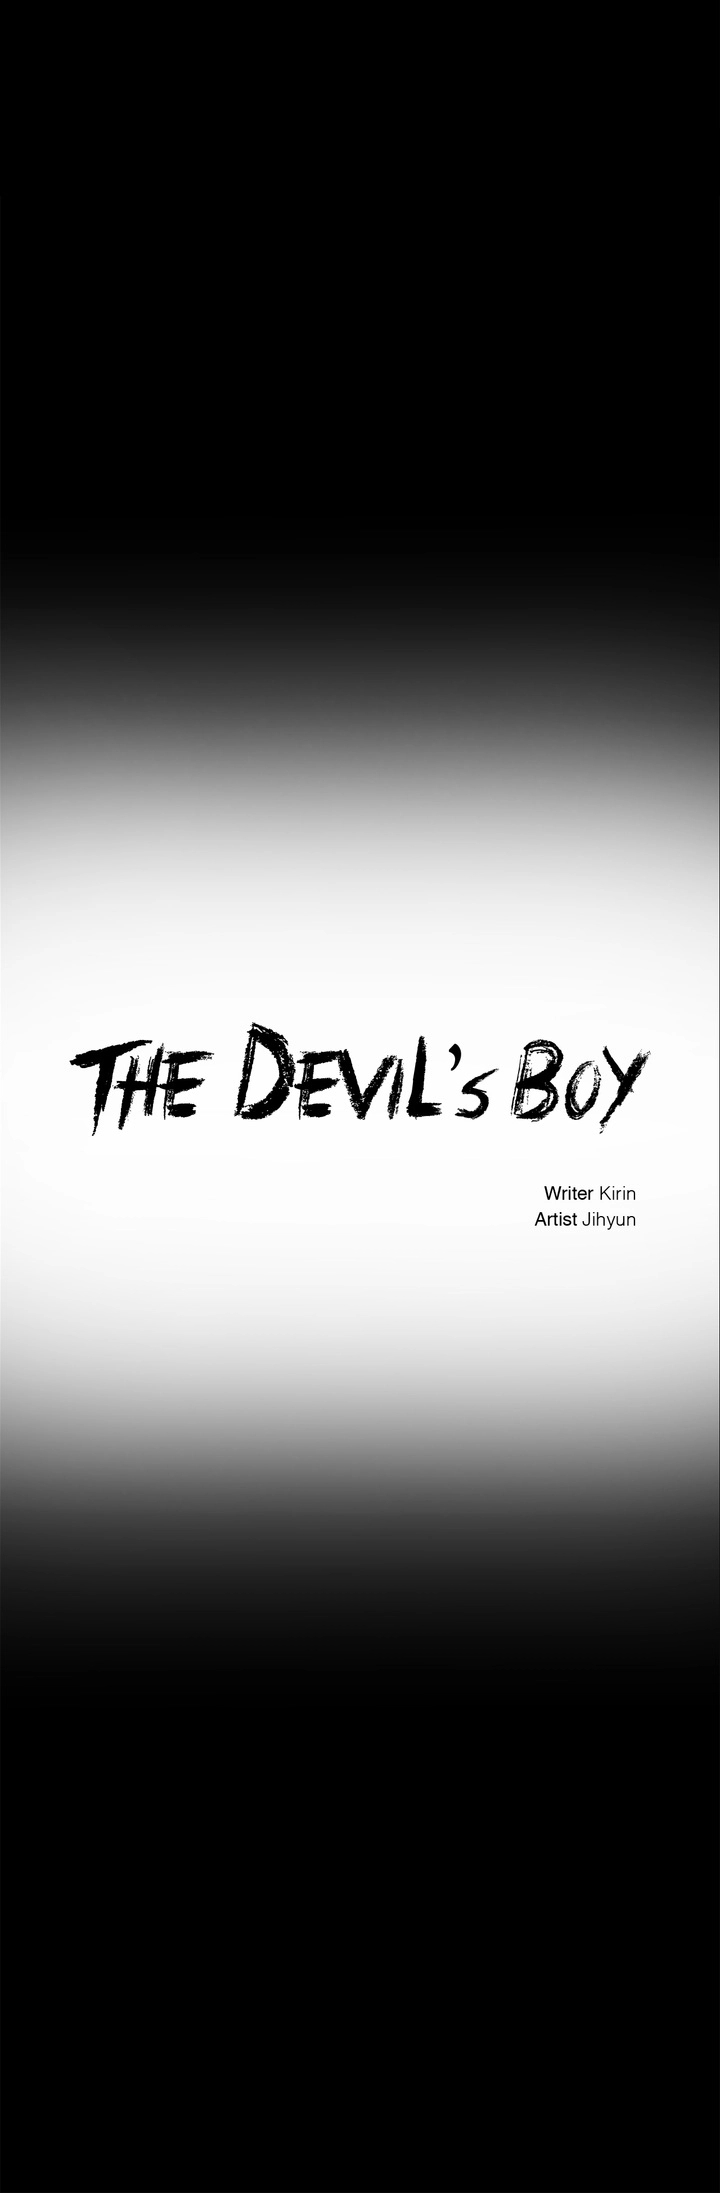 The-Devils-Boy-6-6.jpg